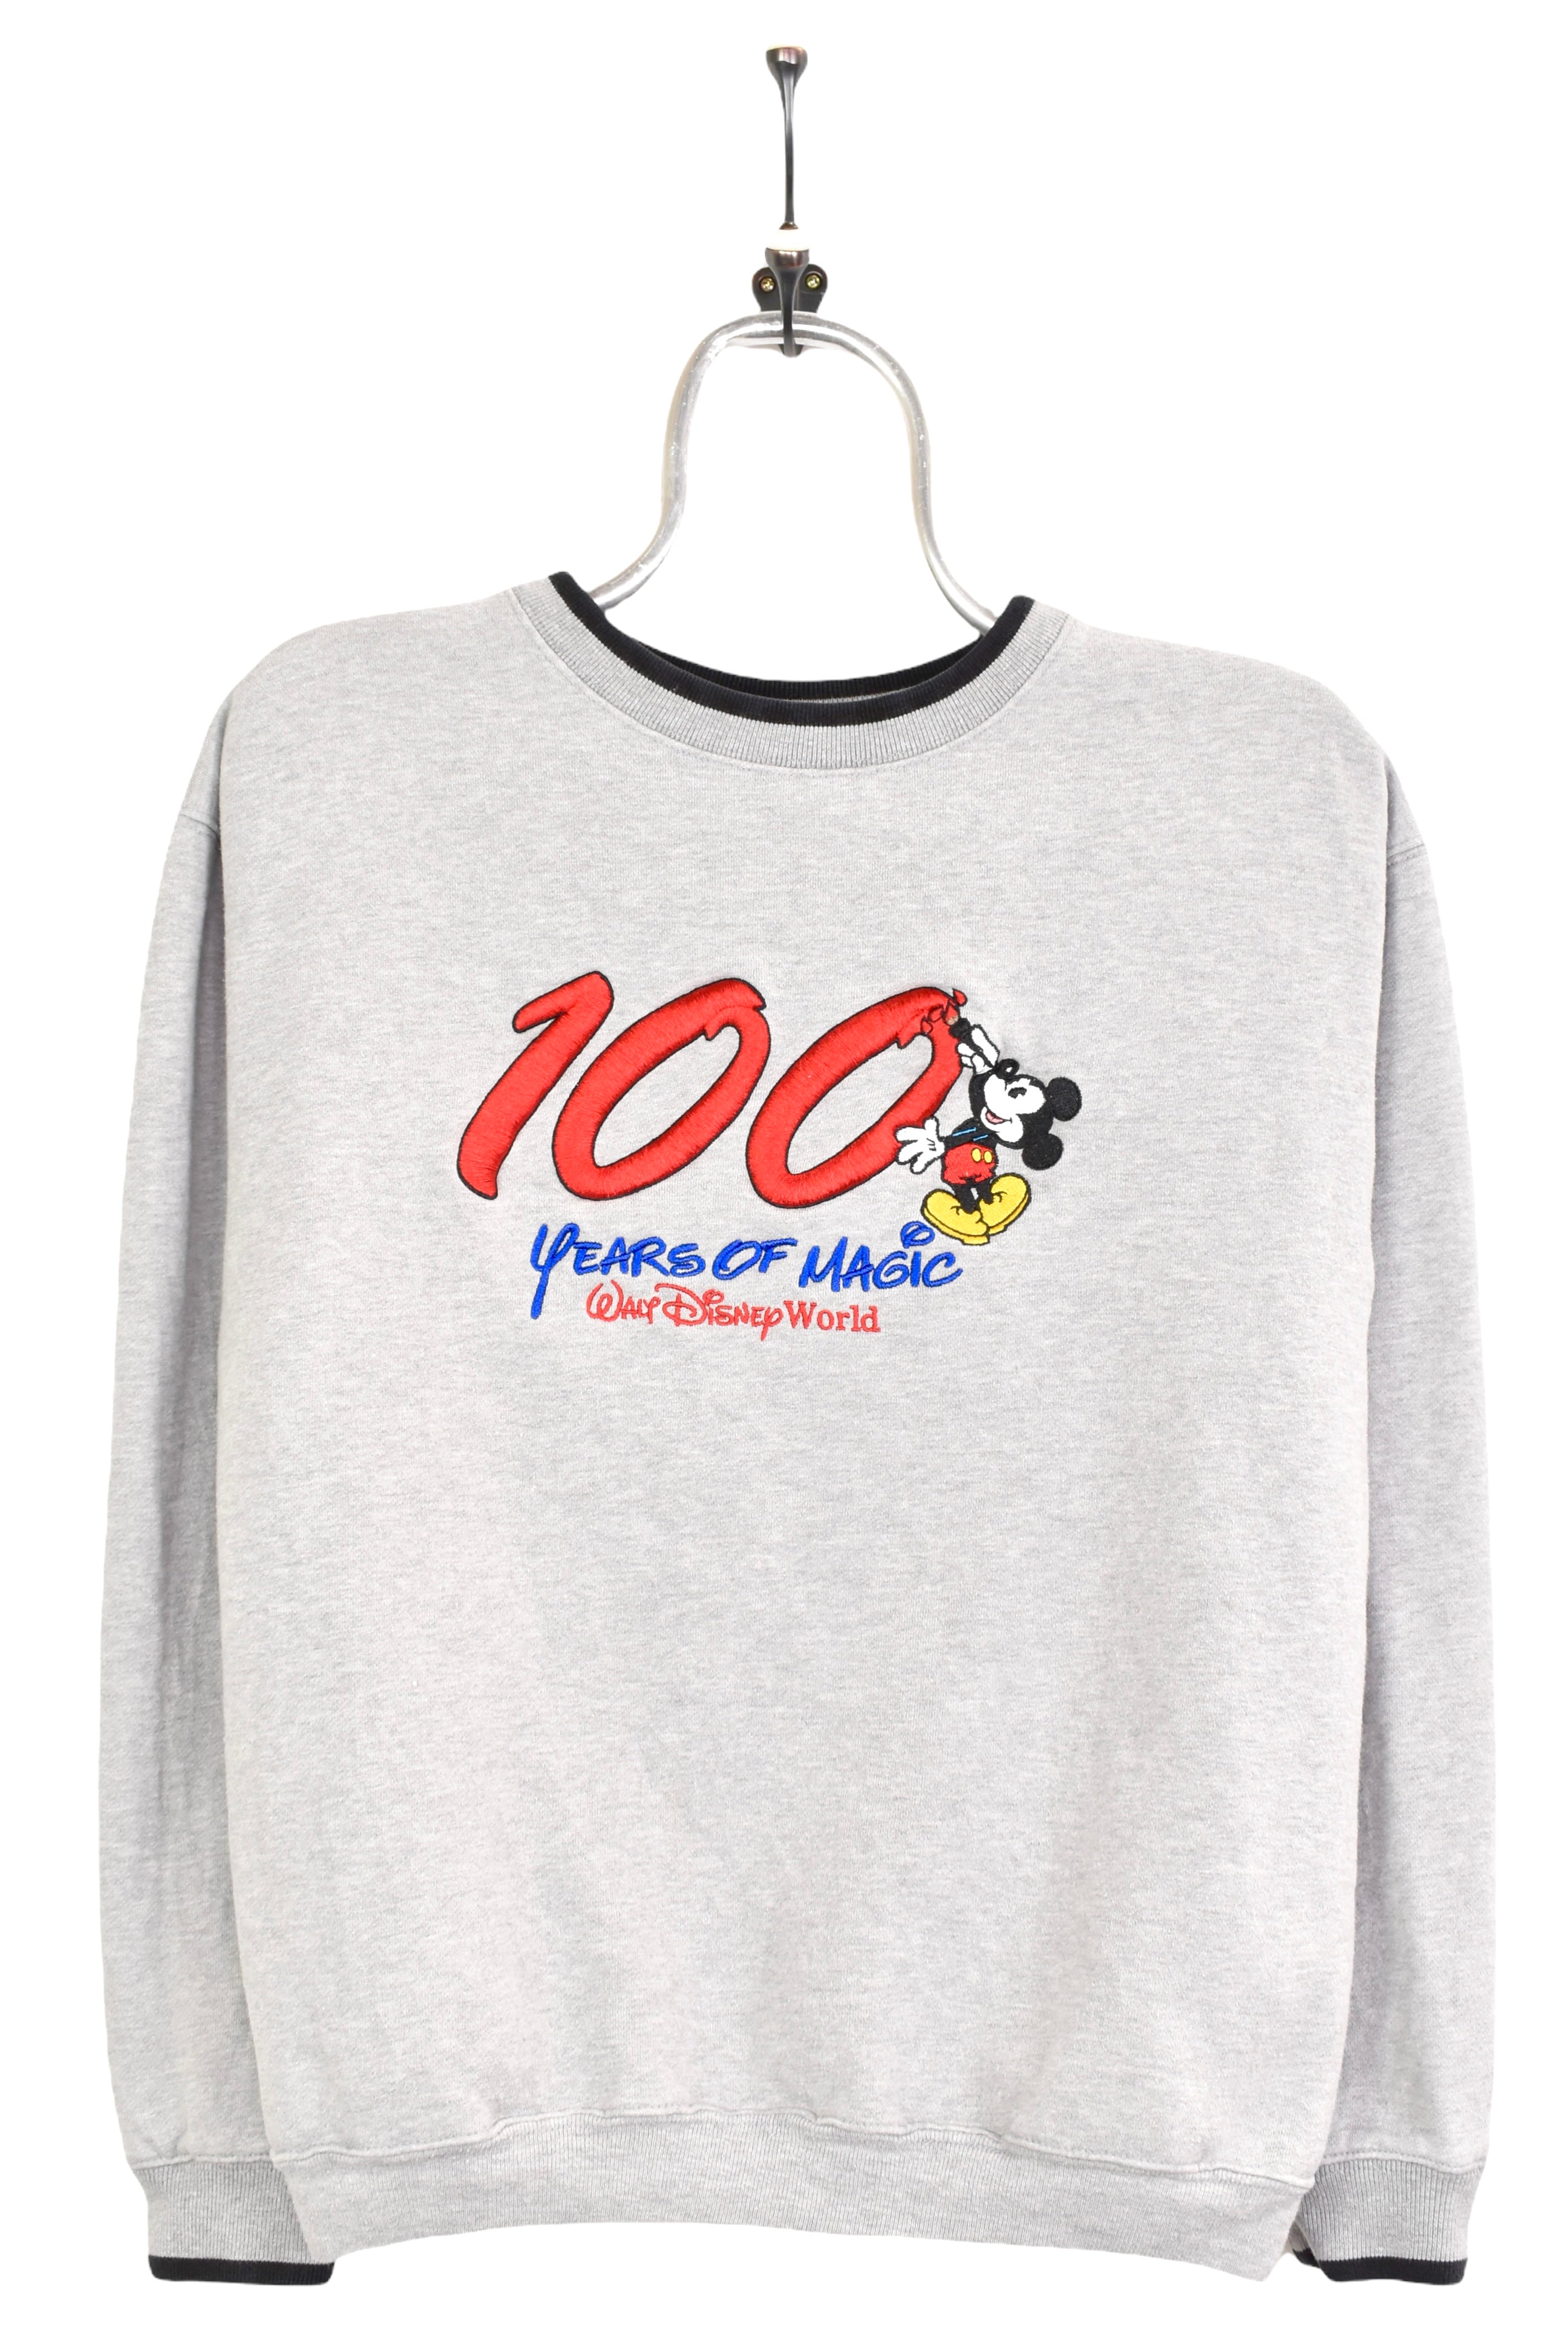 Vintage Women's Disney World embroidered grey sweatshirt | Small DISNEY / CARTOON